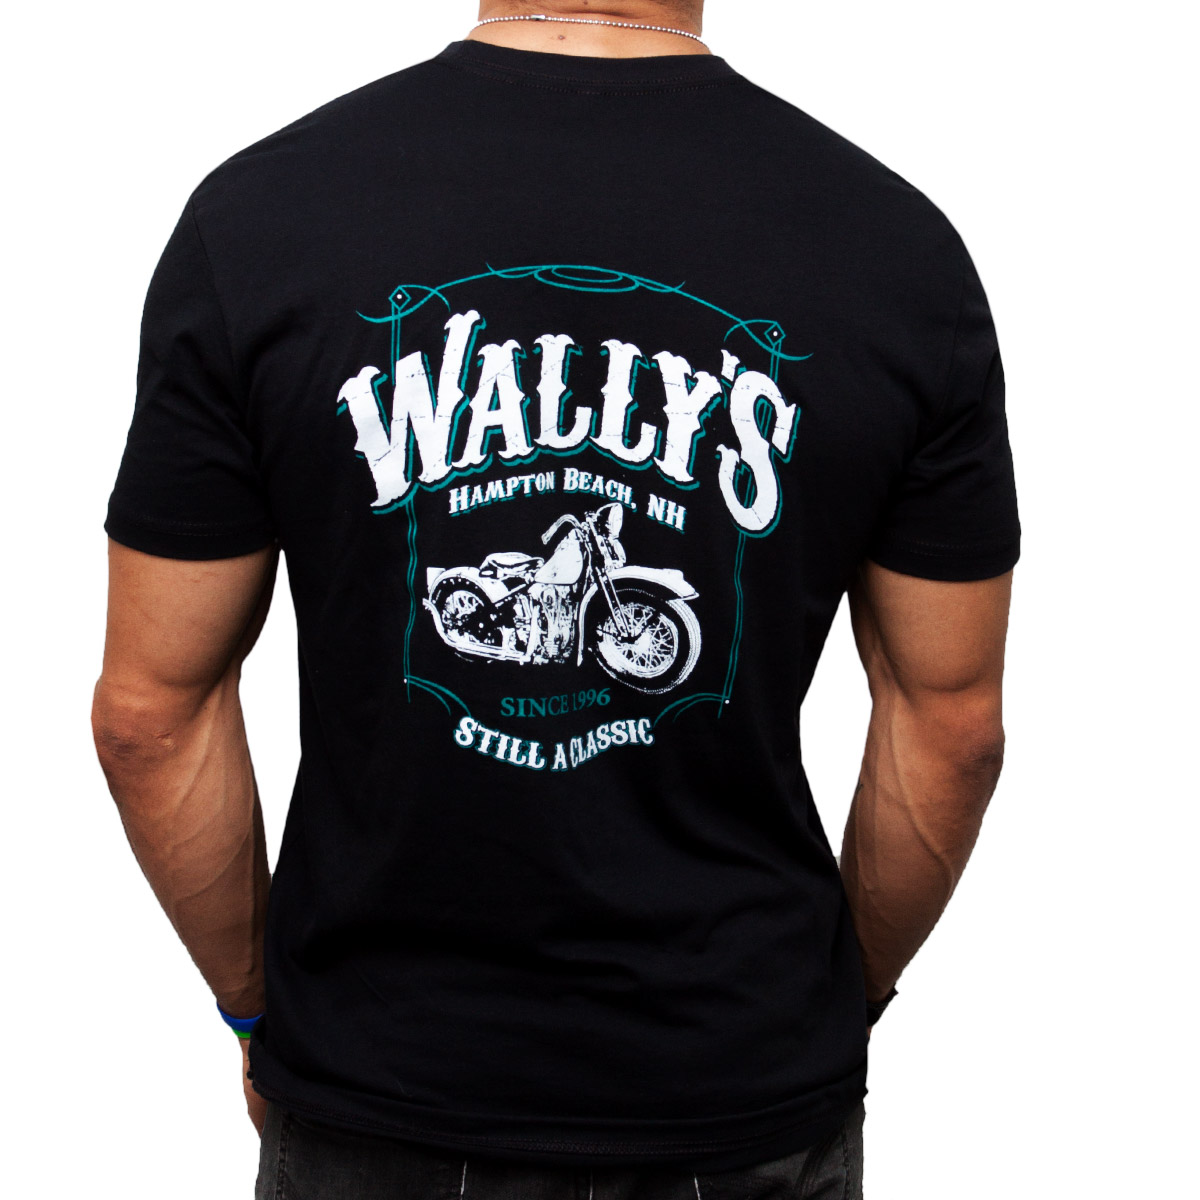 Still a Classic T-shirt - Wally's 